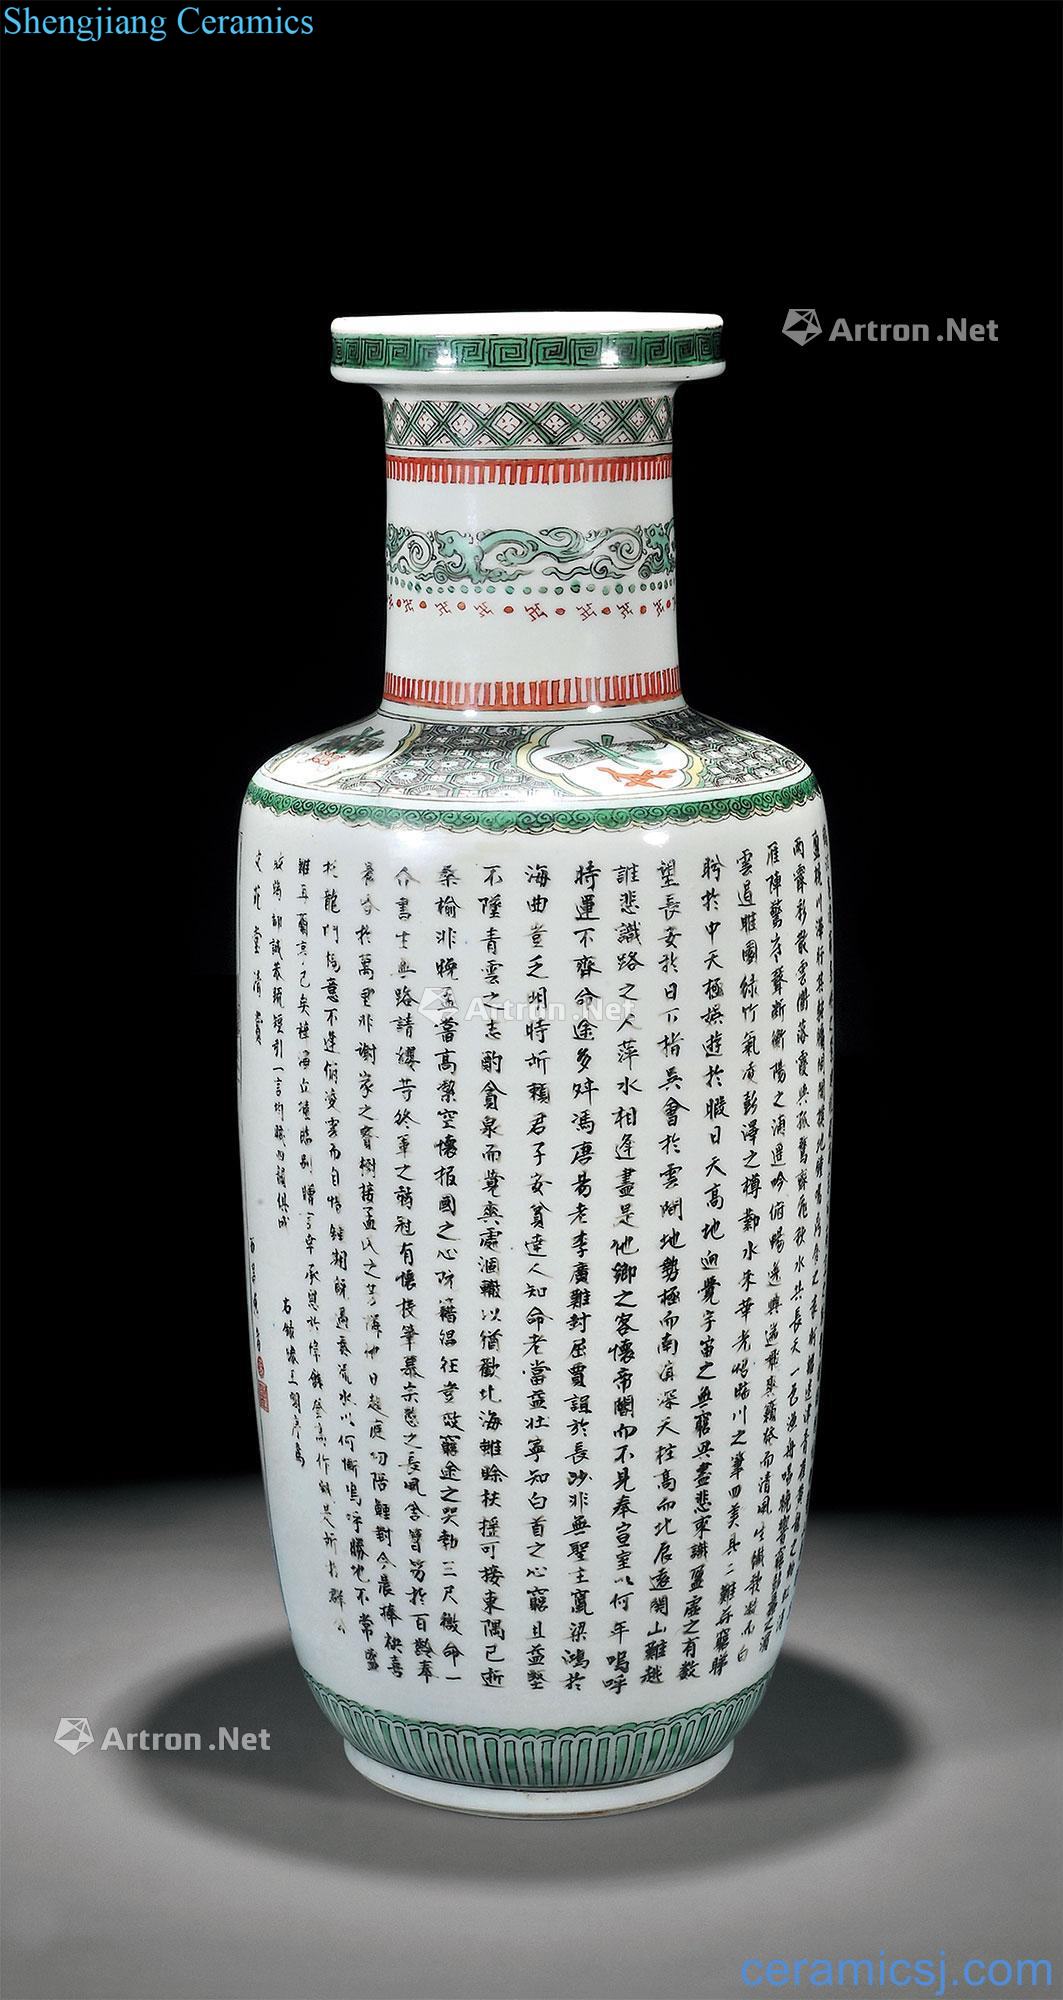 The qing emperor kangxi Colorful tengwang pavilion preface landscape character poems were bottles